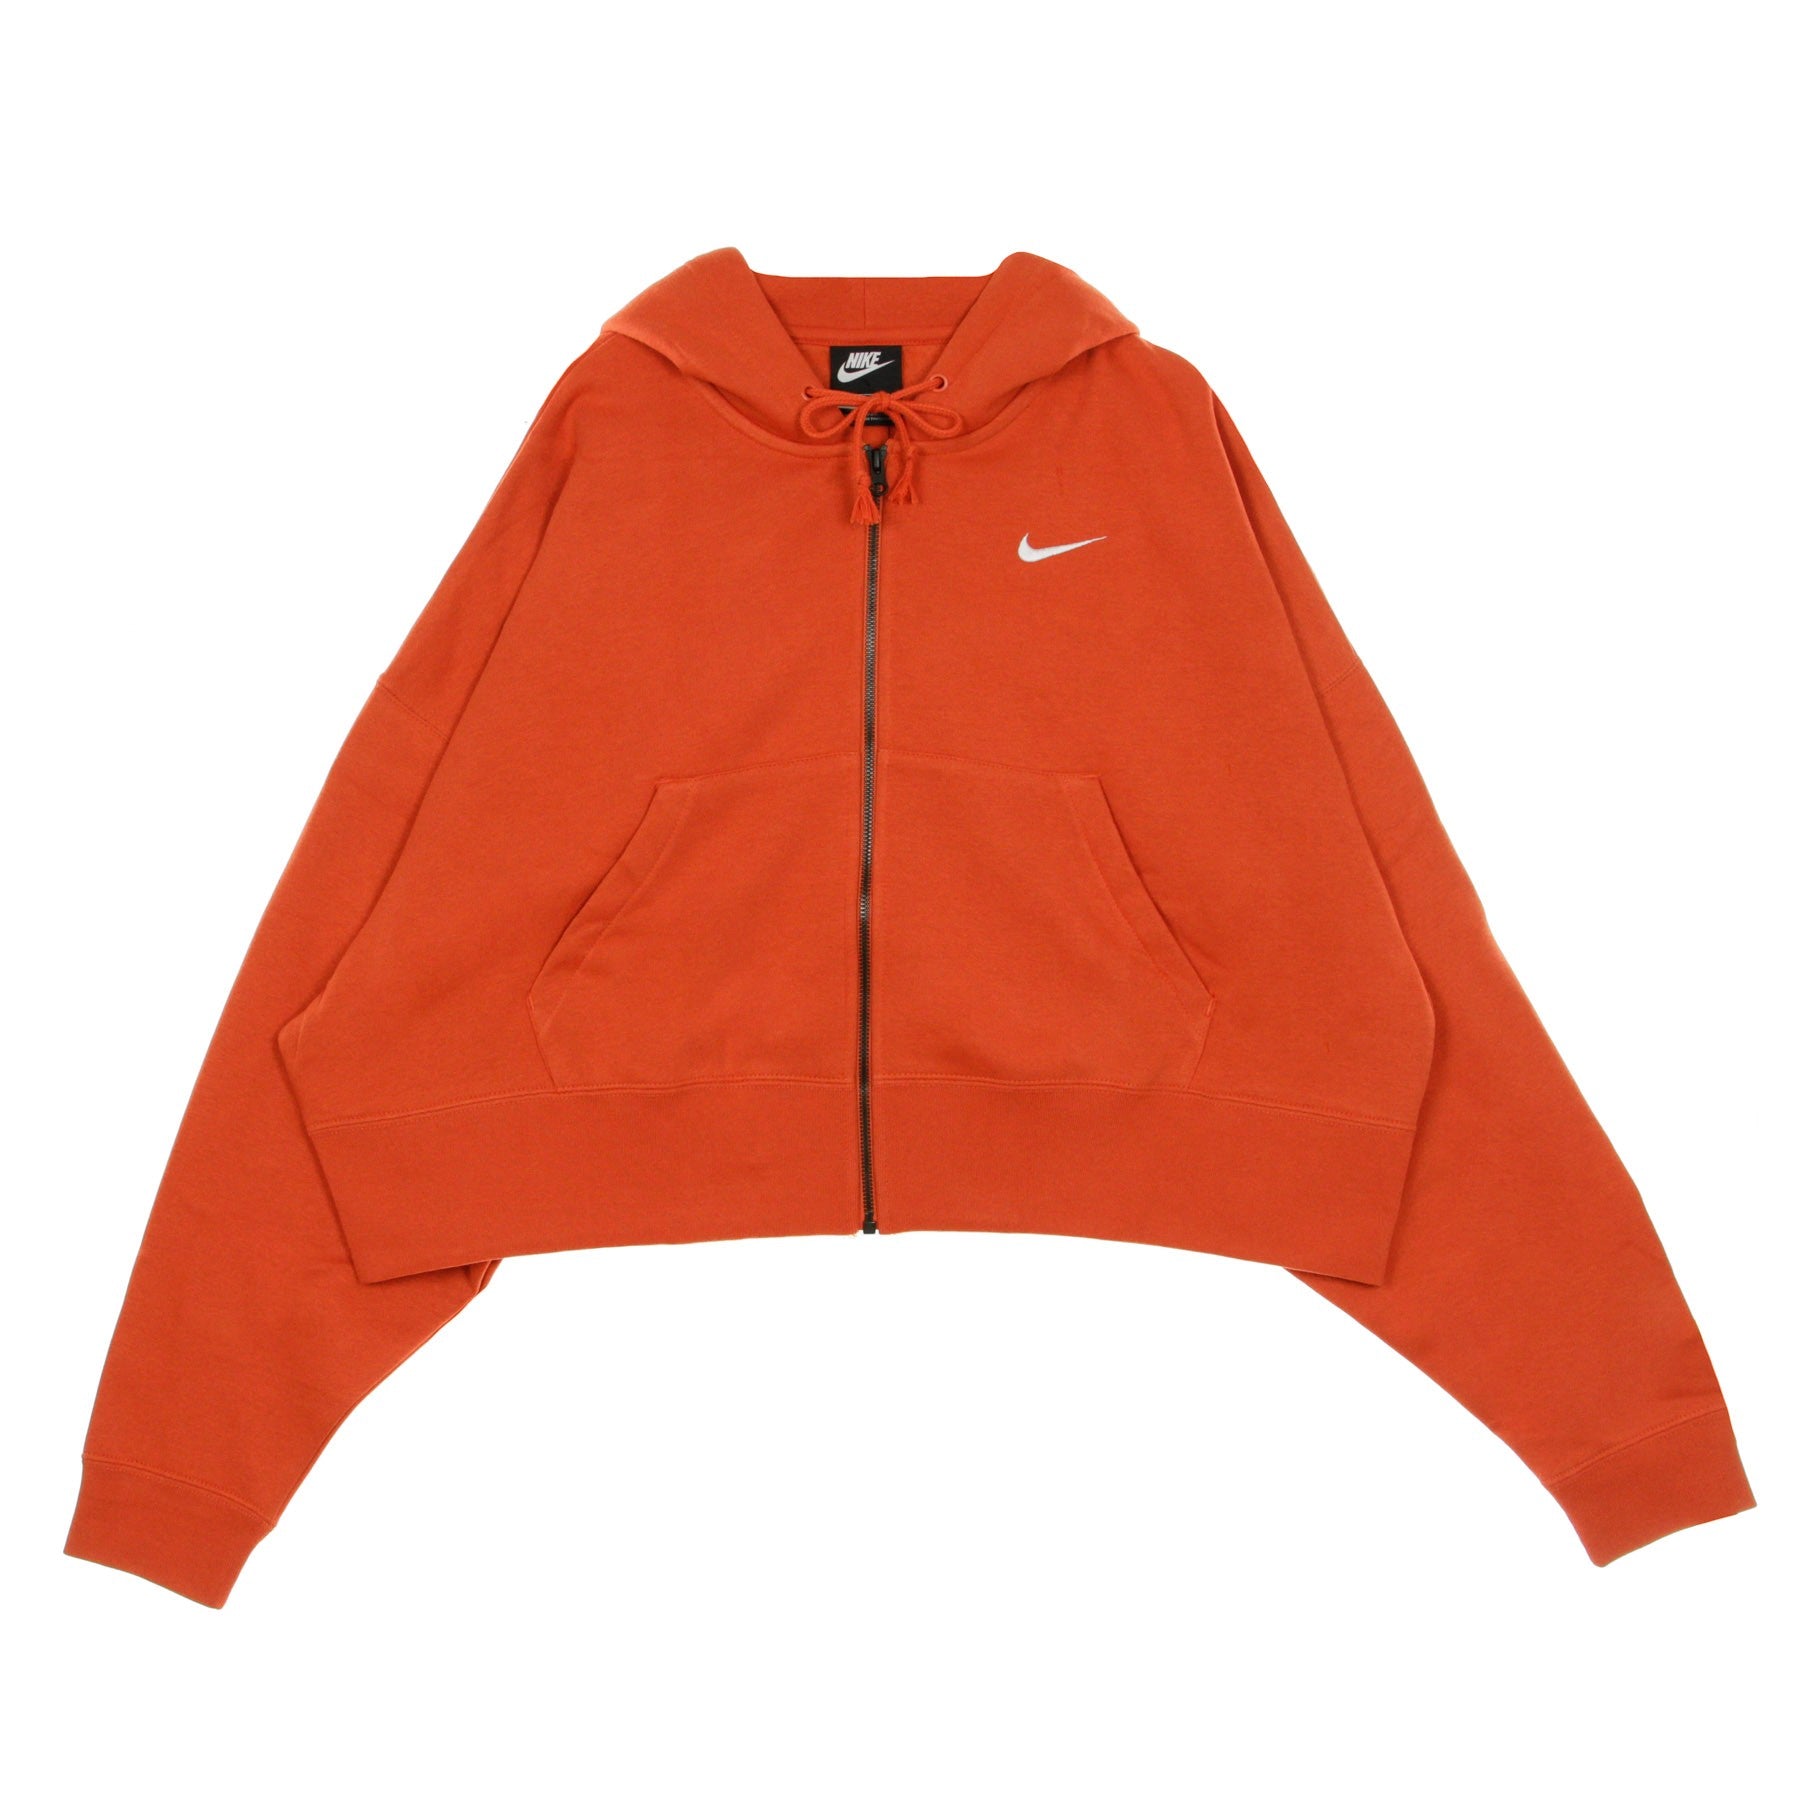 Women's Cropped Hoodie Sportswear Essential Mantra Orange/white